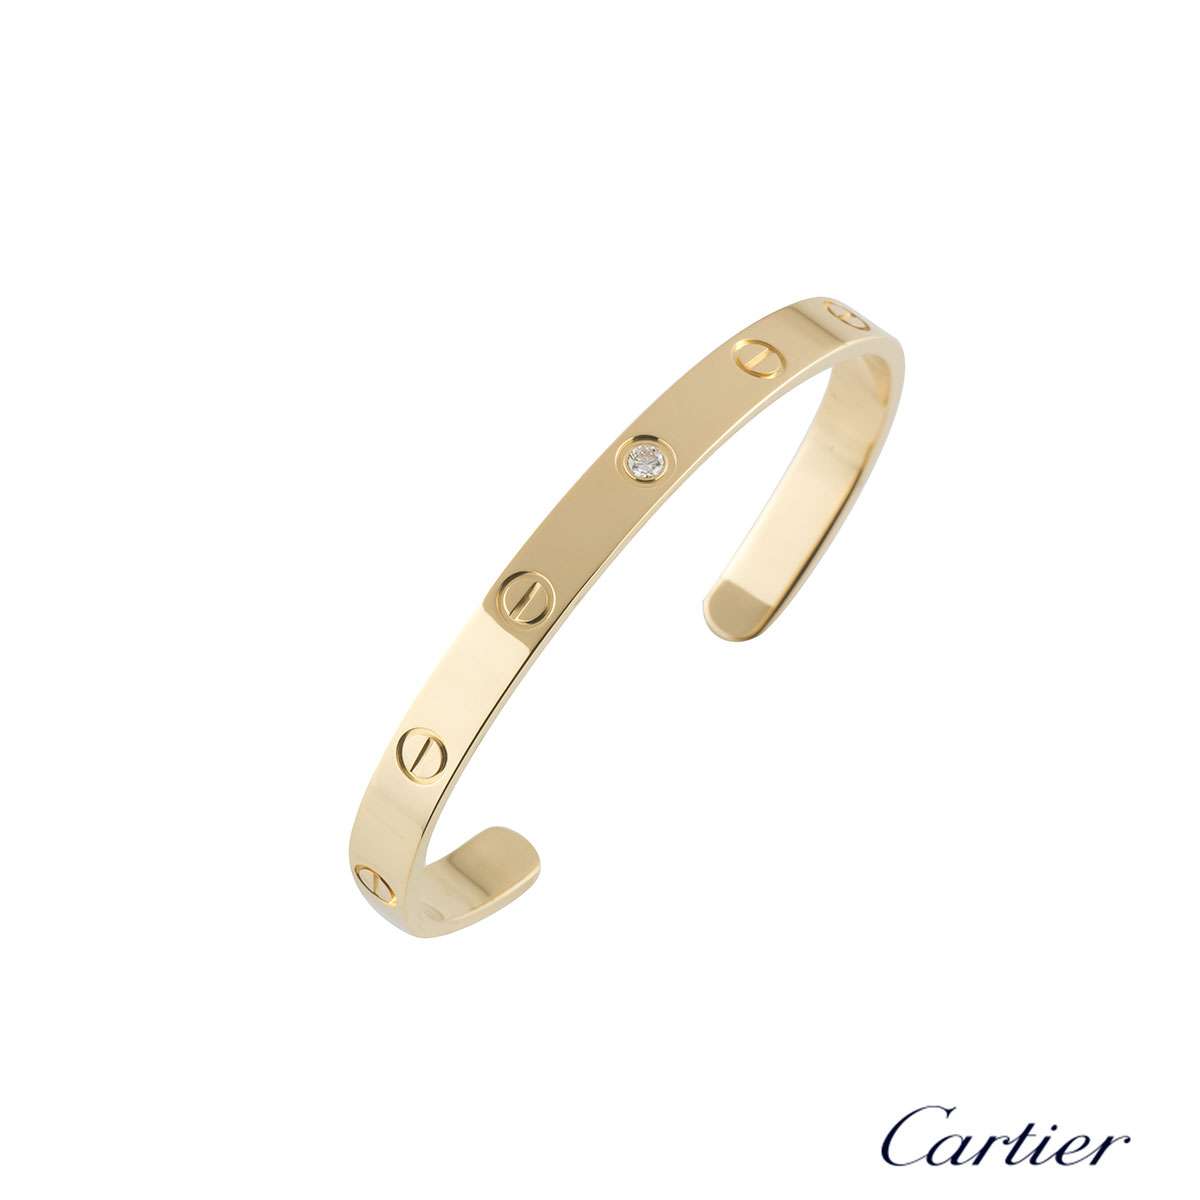 cartier cuff or bracelet